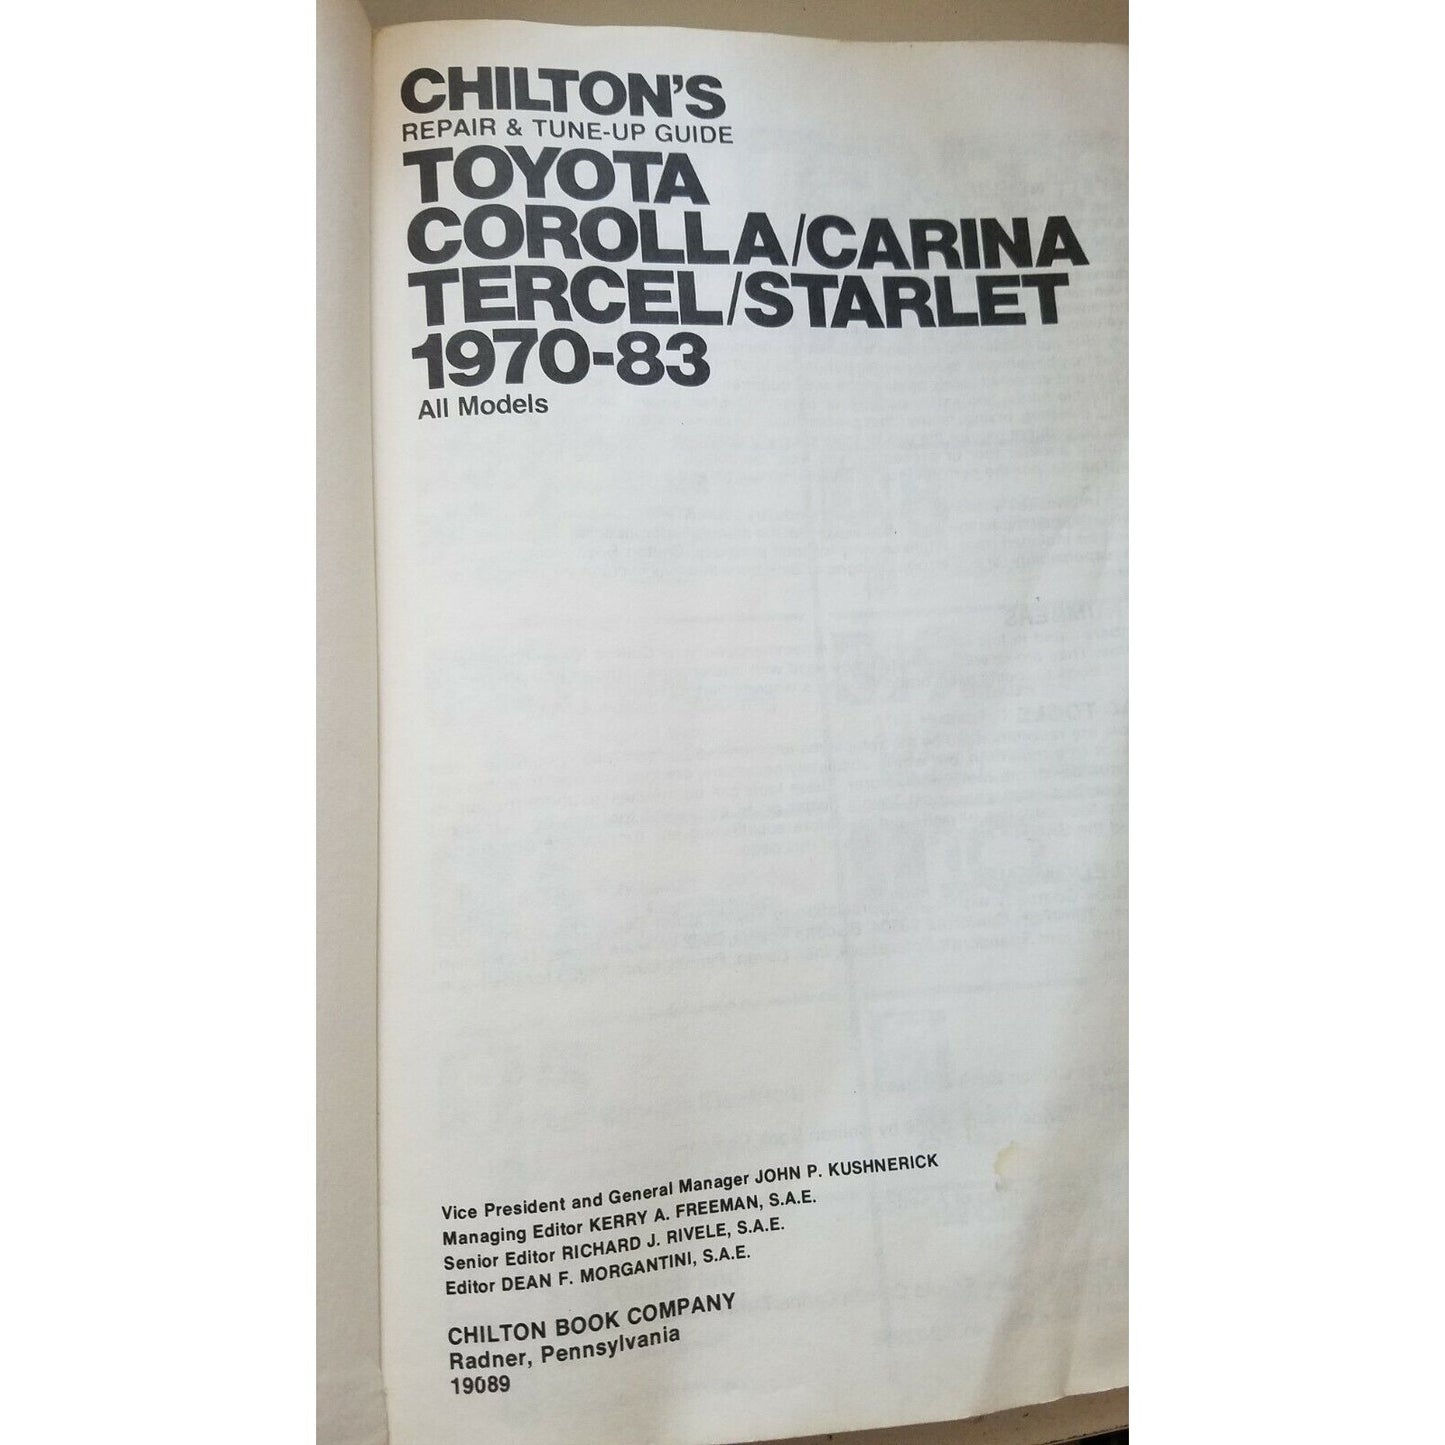 1970 -1983  Chilton's Toyota Corolla Carina Tercel Starlet  All Models Repair